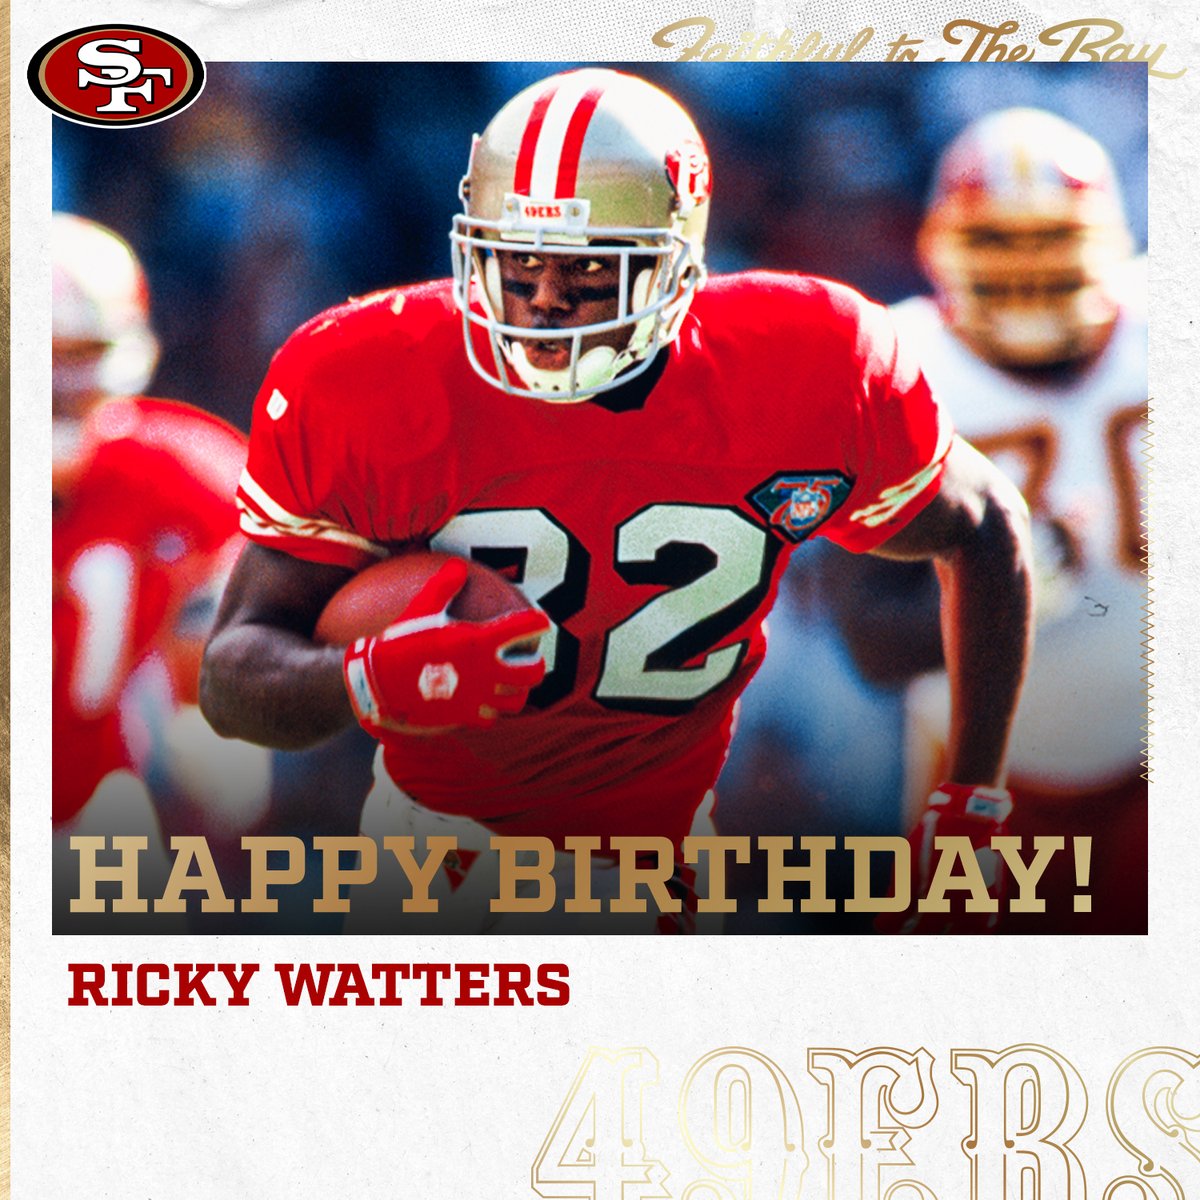 Happy birthday @RickyWatters!